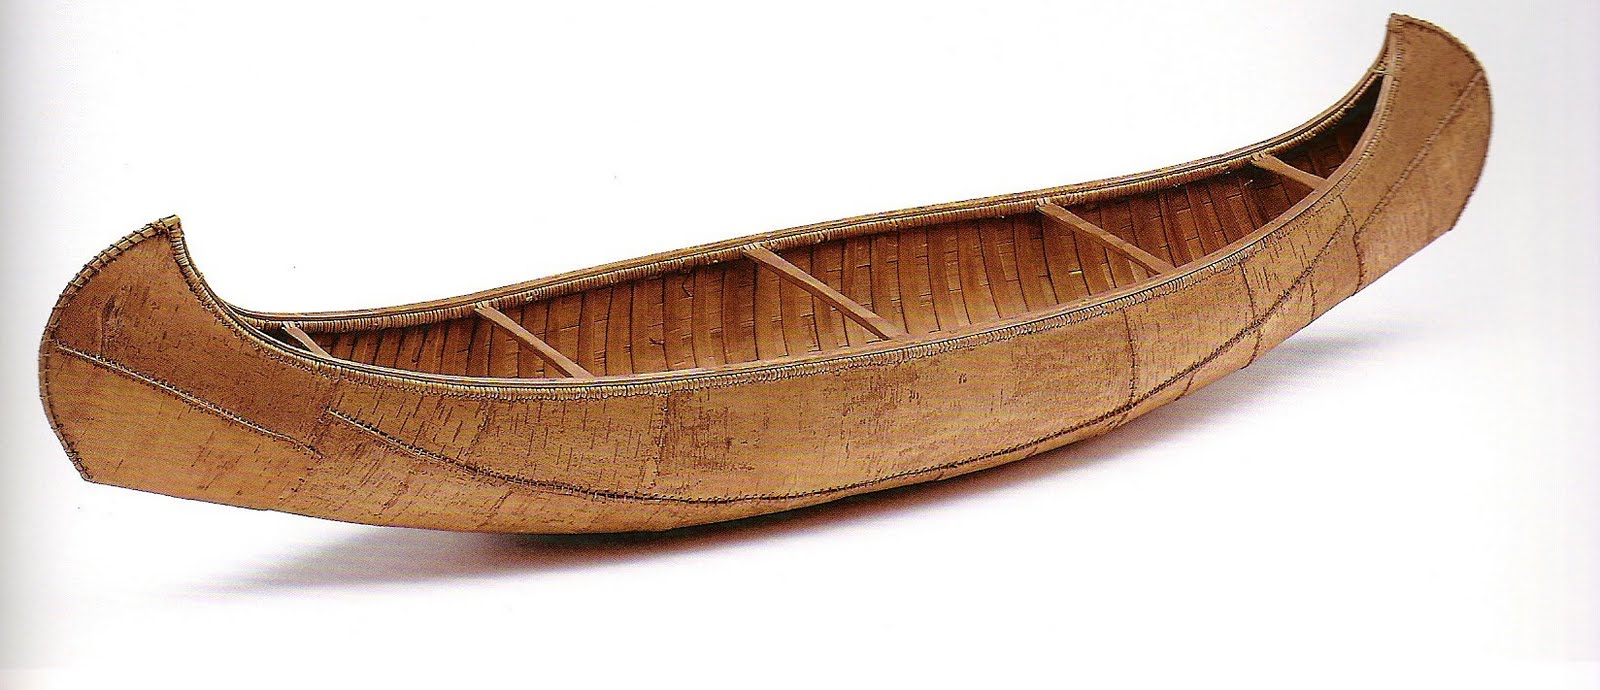 Beaver Bark Canoes: Eastern Cree Crooked Canoe